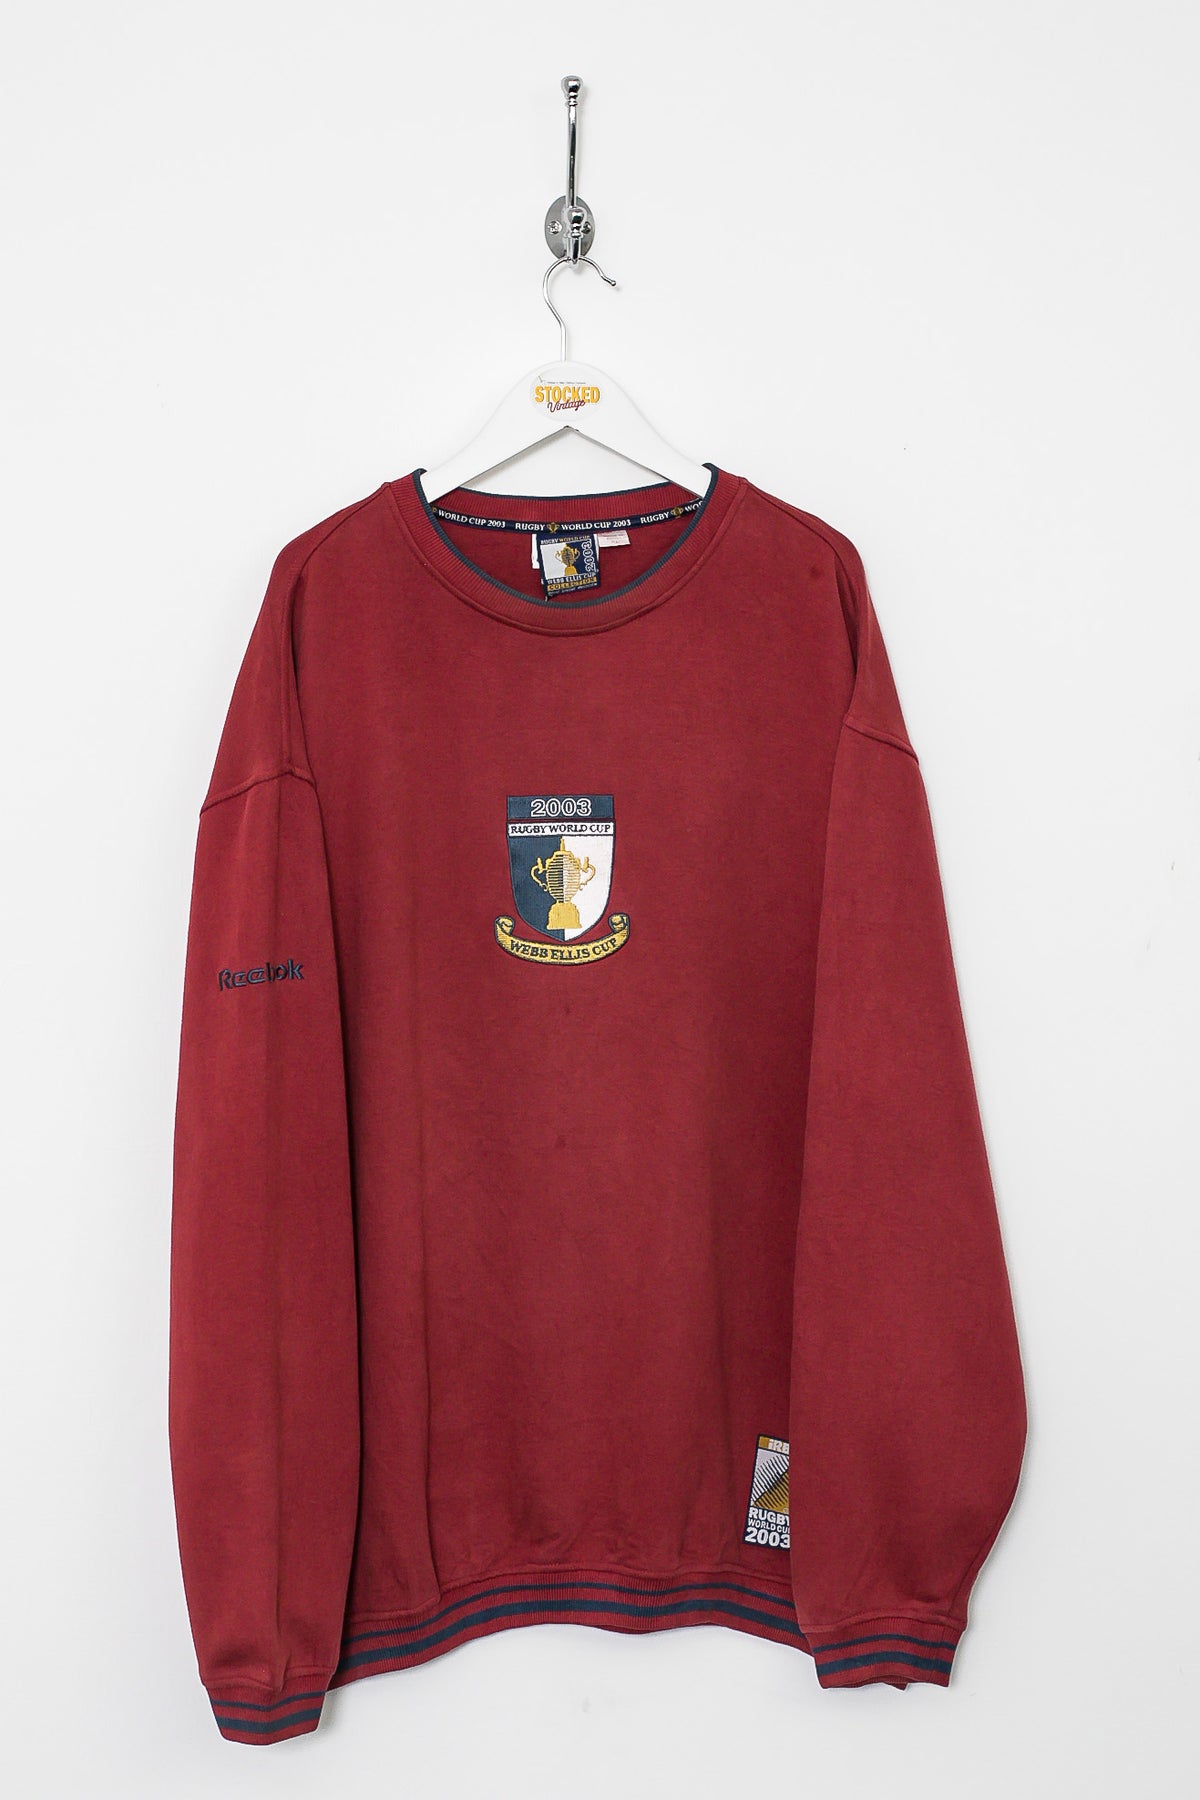 2003 Reebok Rugby World Cup Sweatshirt (XL)